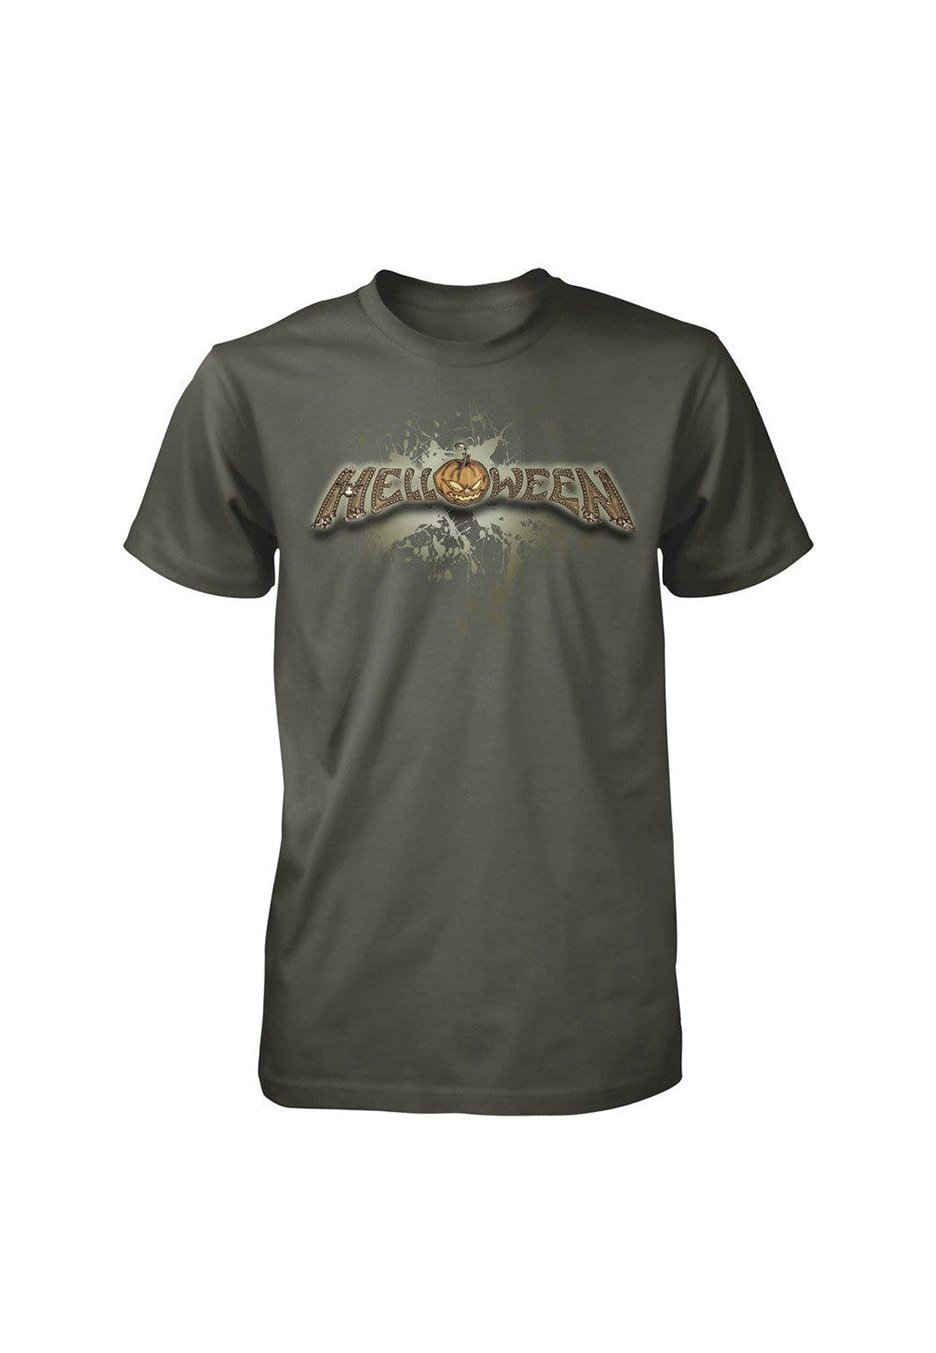 Helloween - Unarmed Khaki - T-Shirt